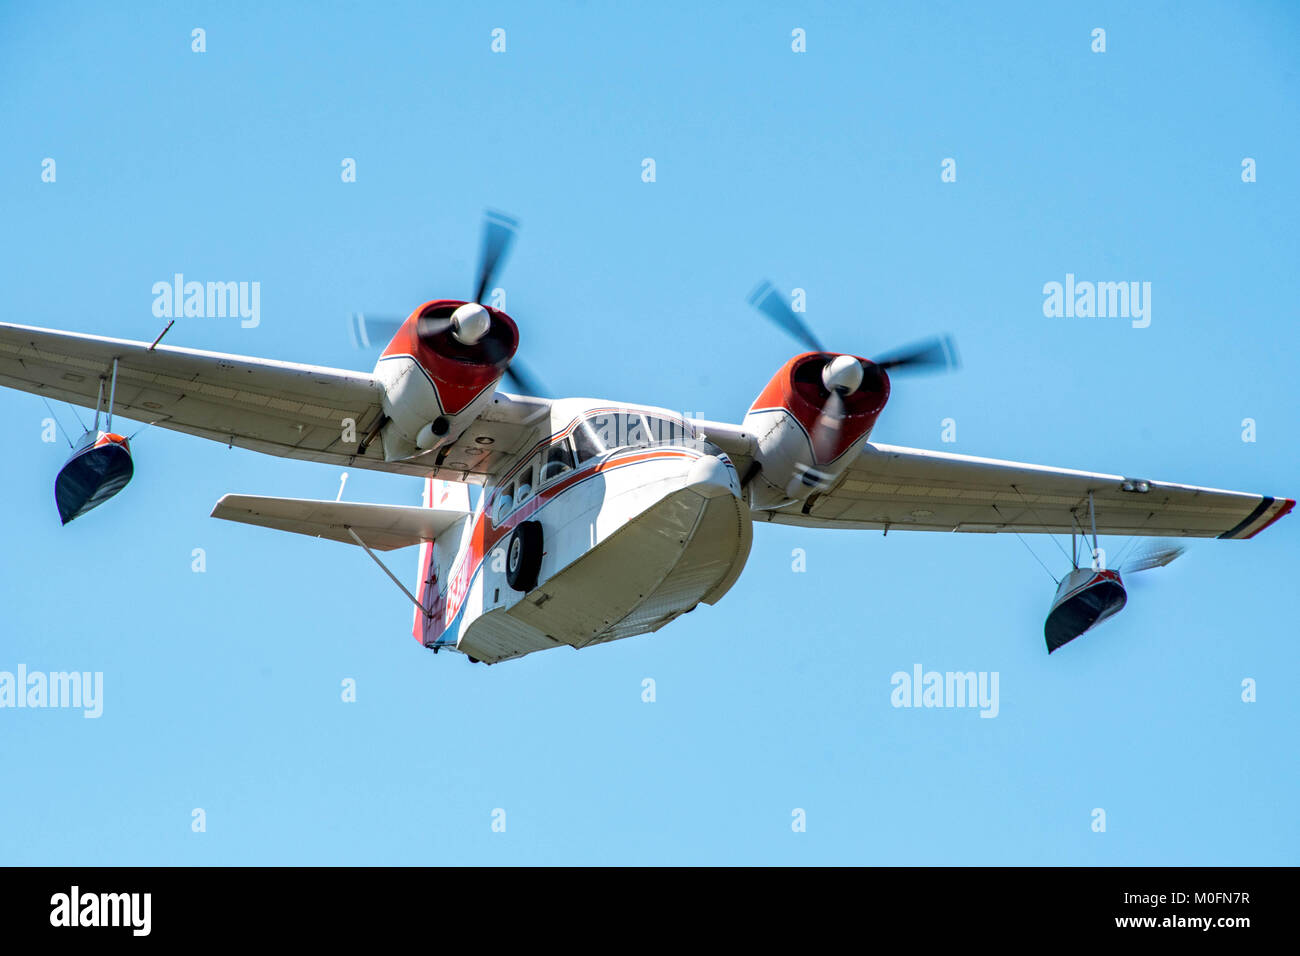 A Grumman Widgeon majestically cuts through the clear skies Stock Photo